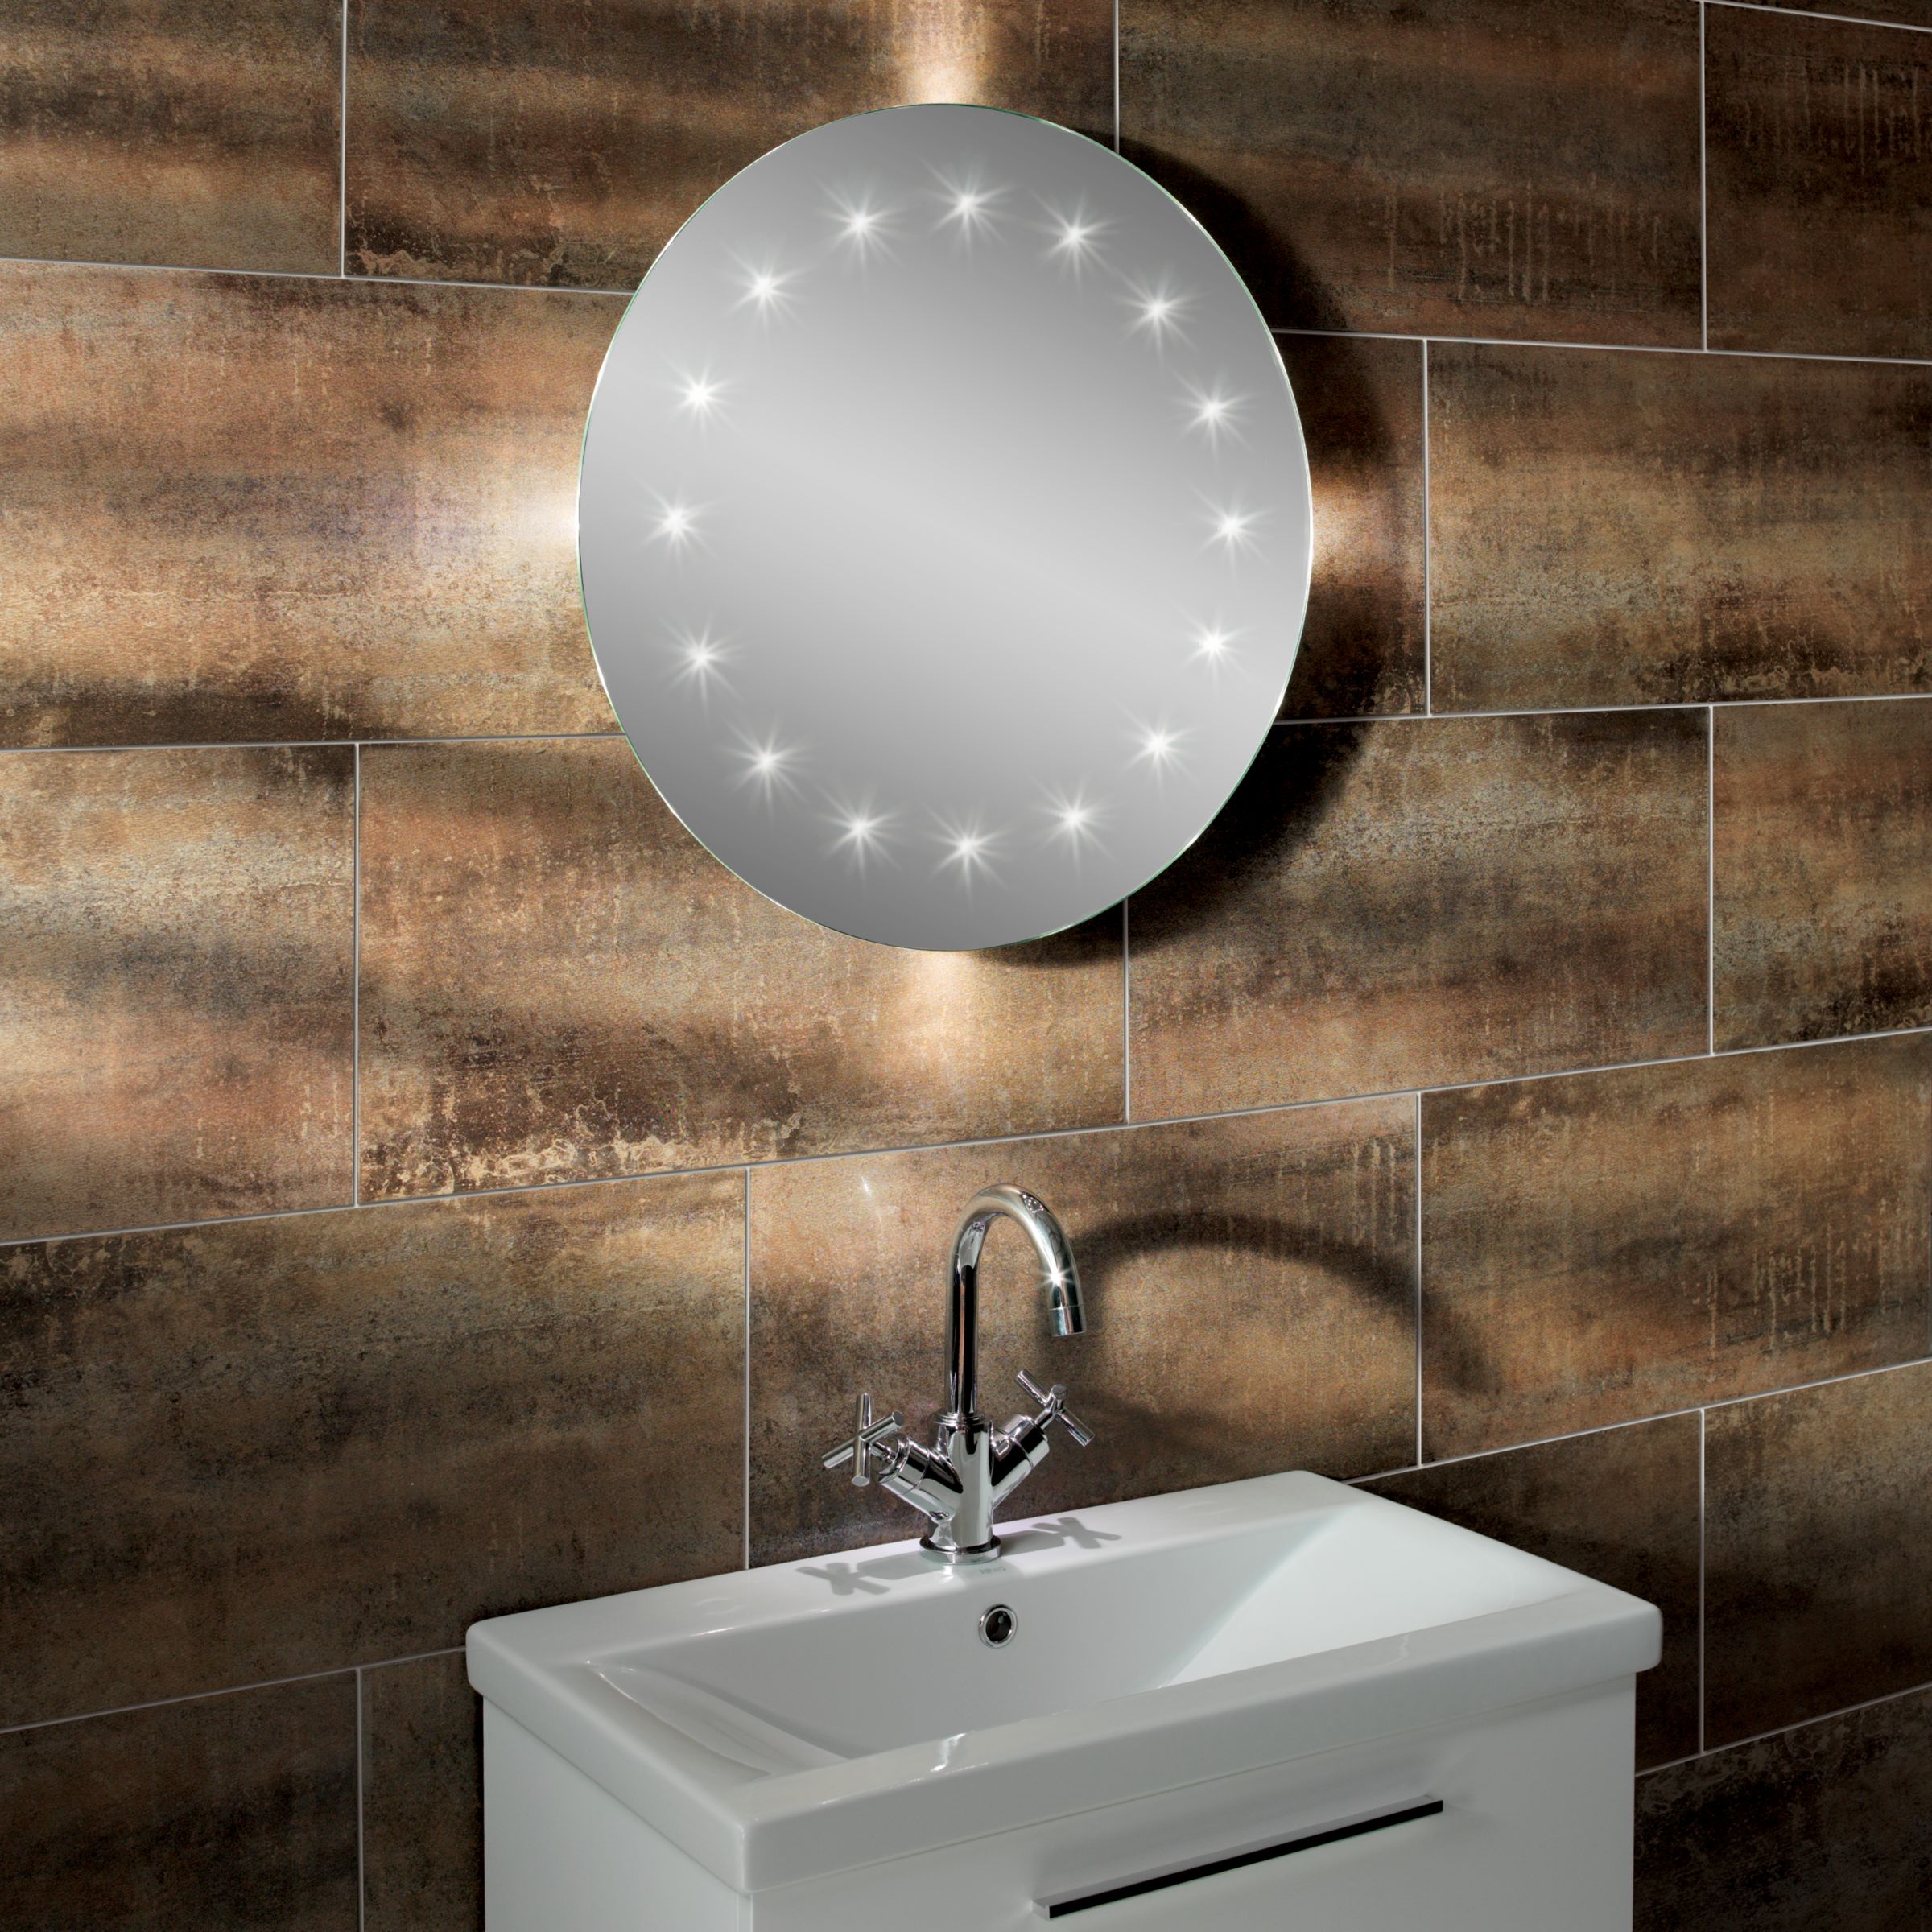 Opus LED Bathroom Mirror with Ambi Lights at JohnLewis